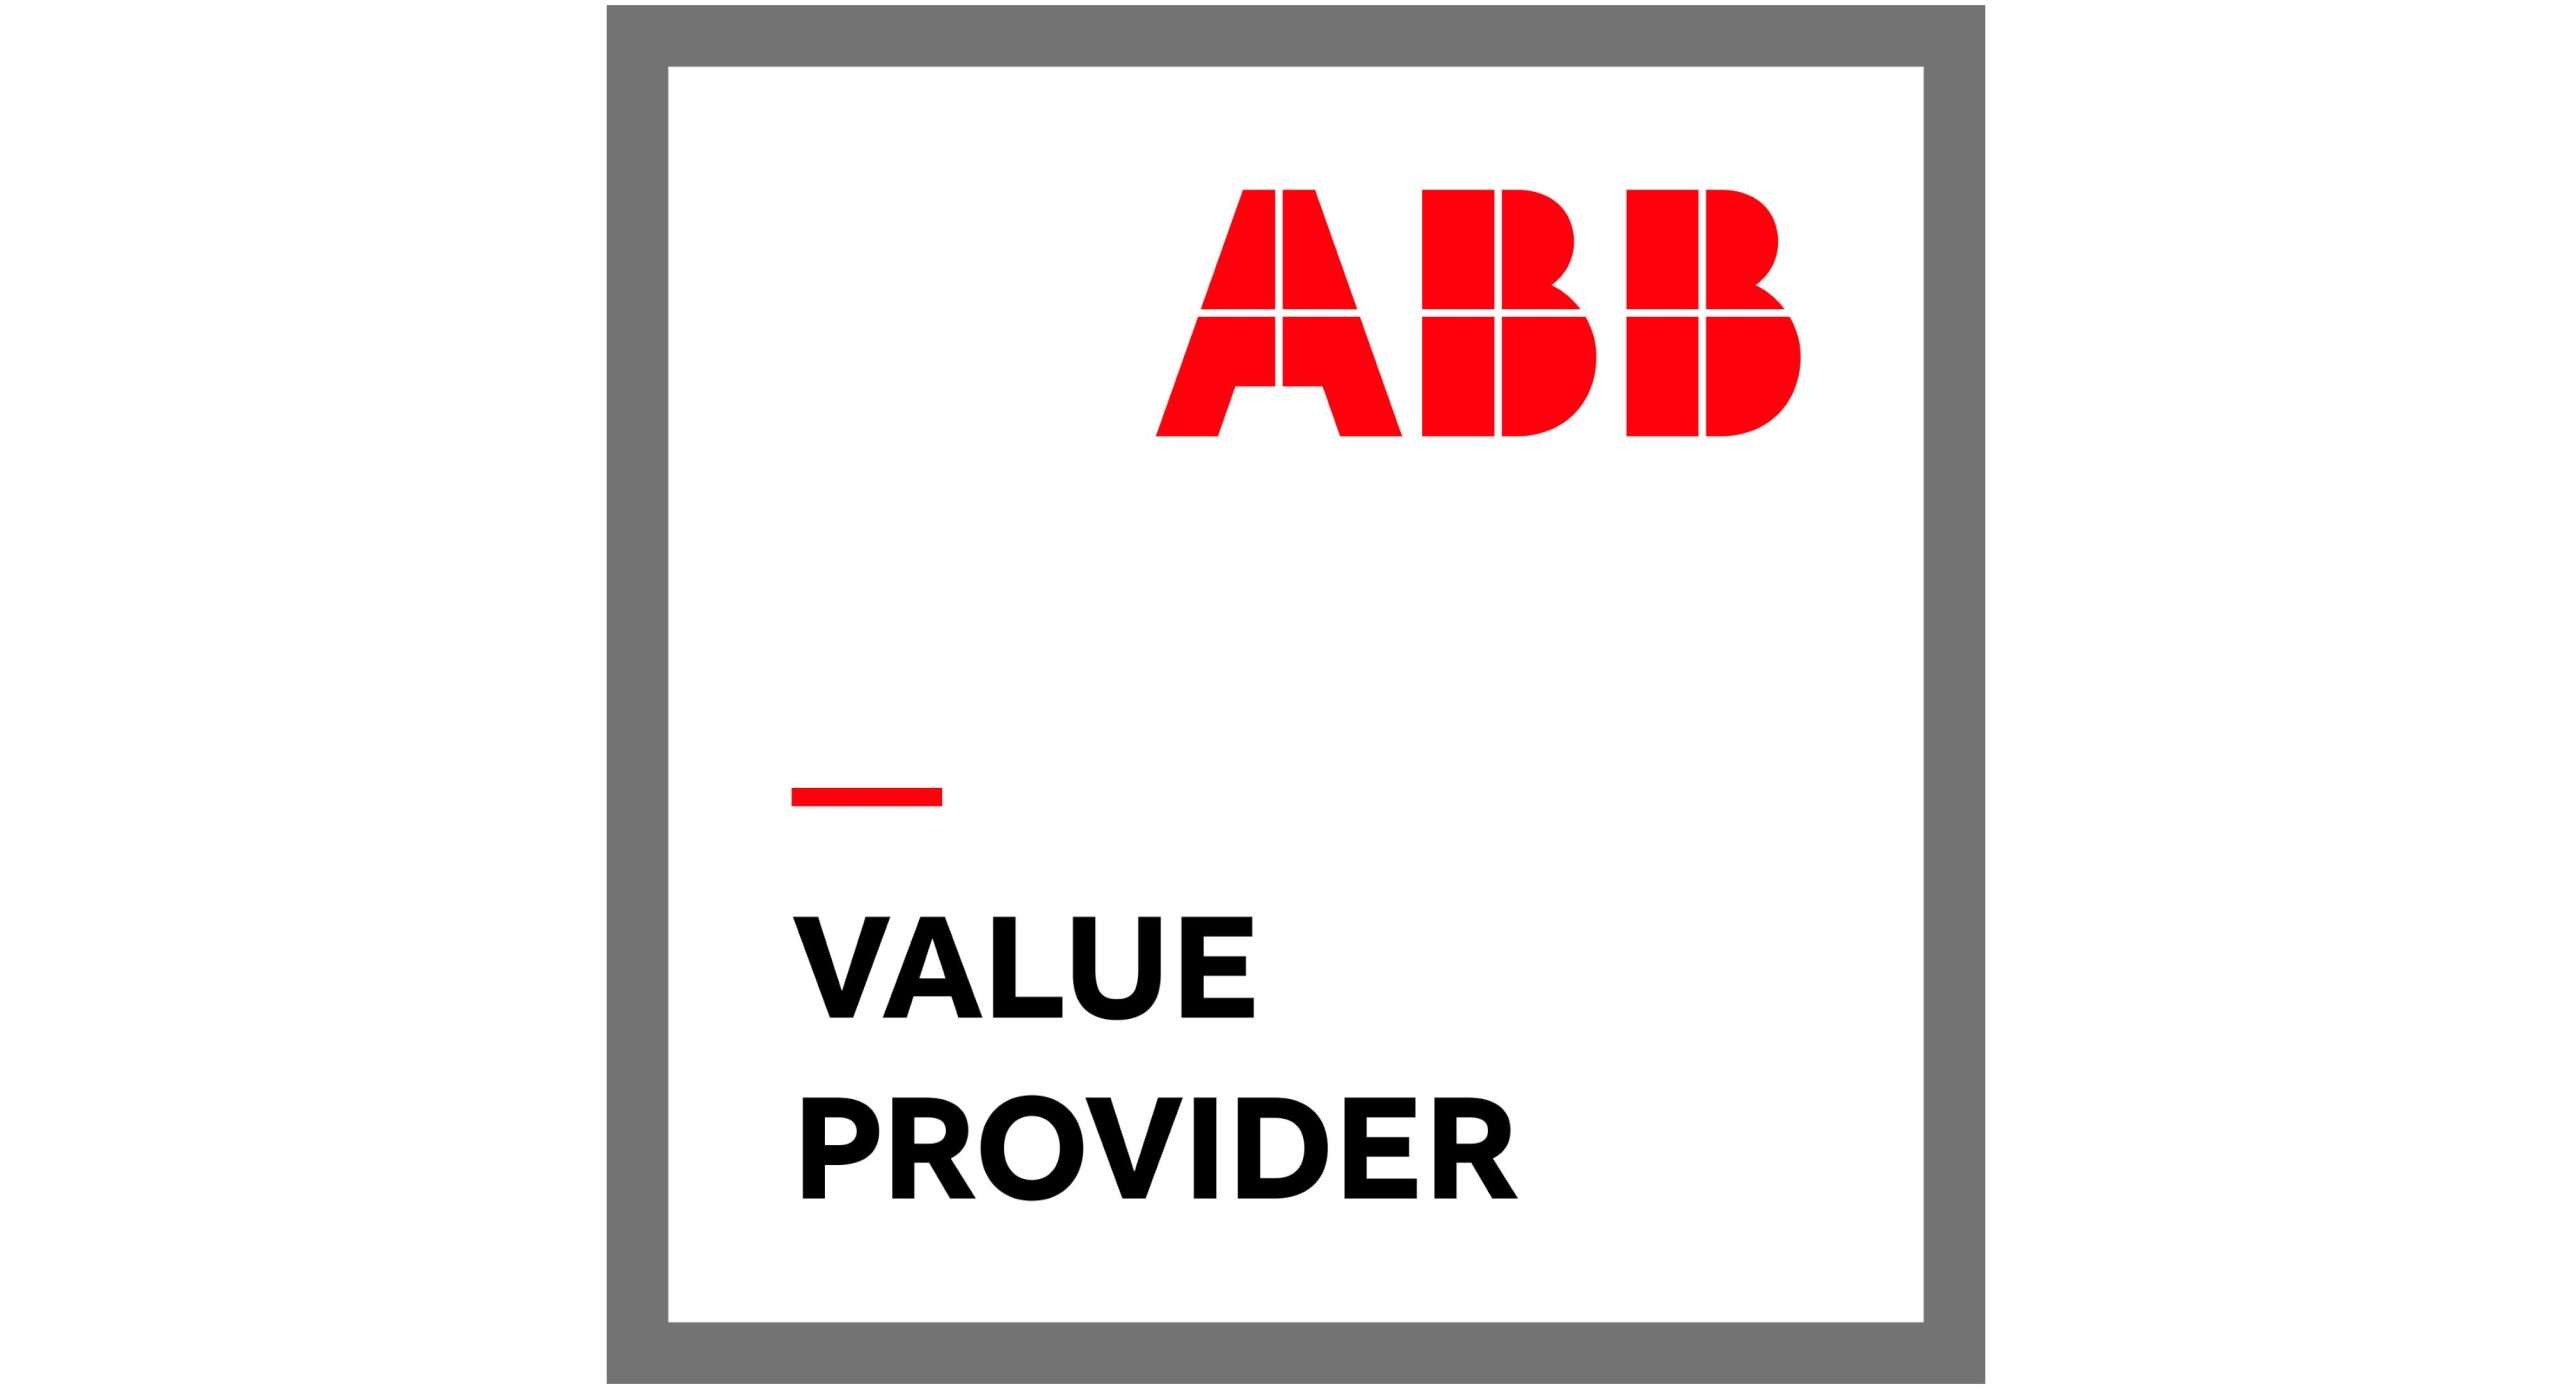 ABB value provider